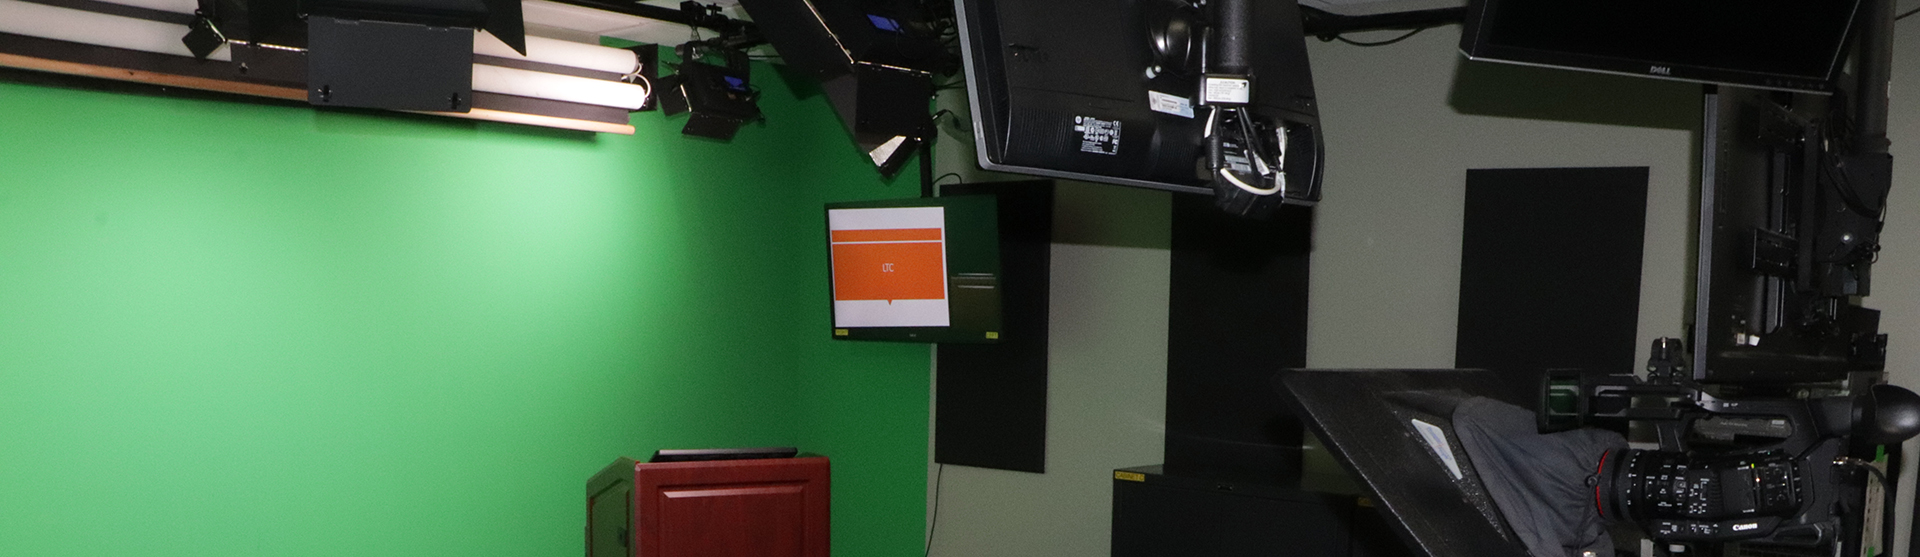 green screen in the media recording studio